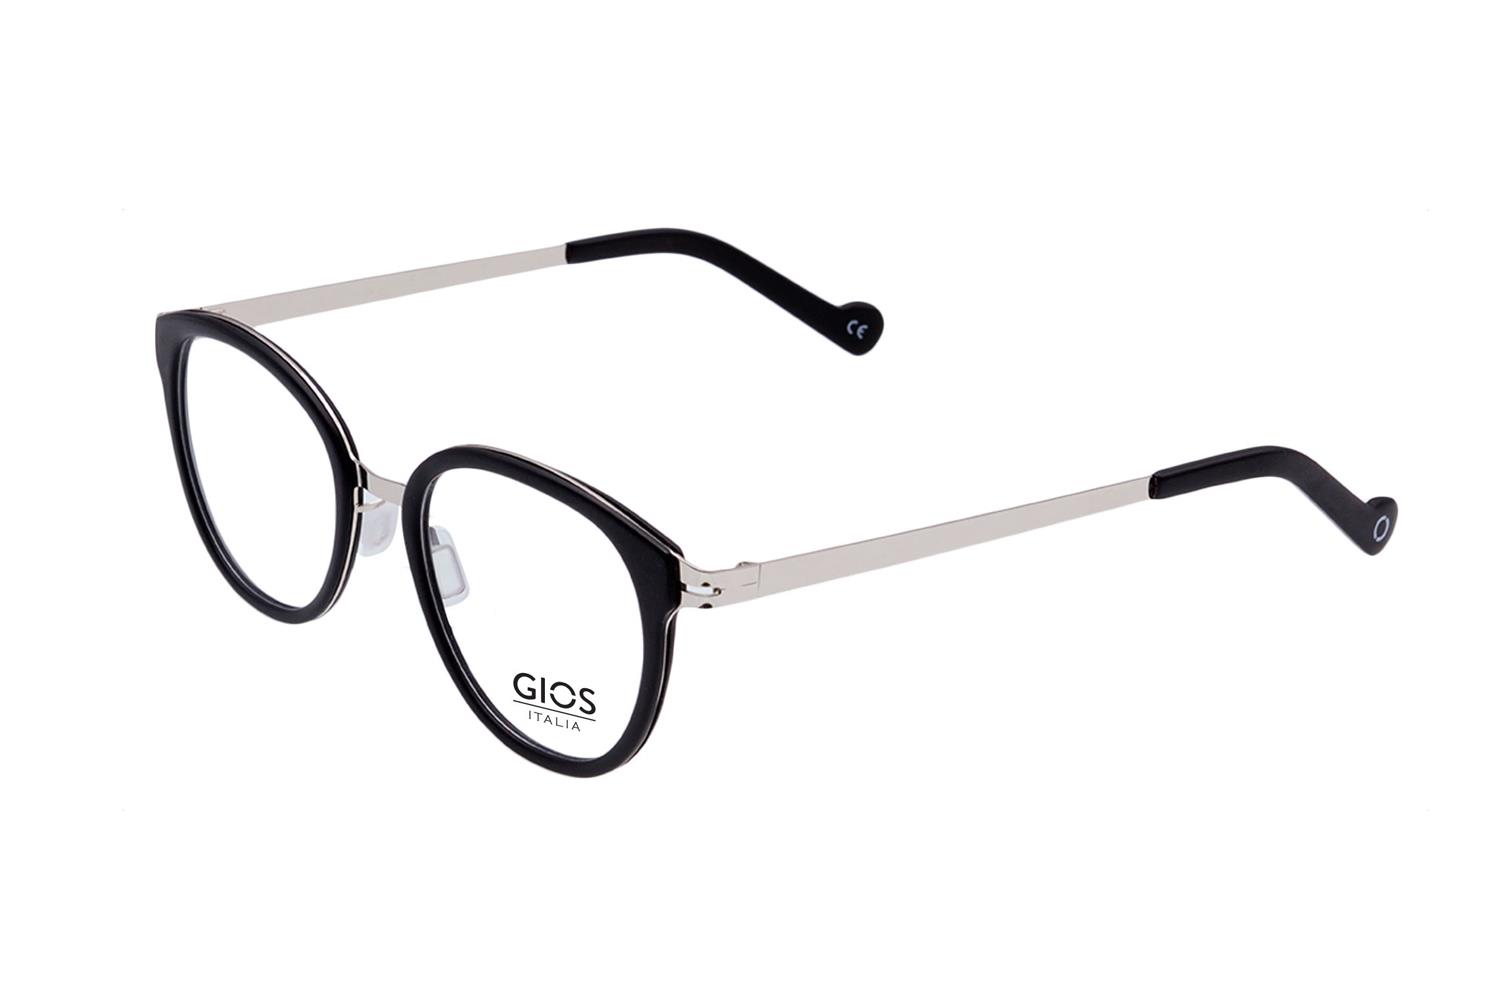 Picture of Gios Italia Eyeglasses SN200025